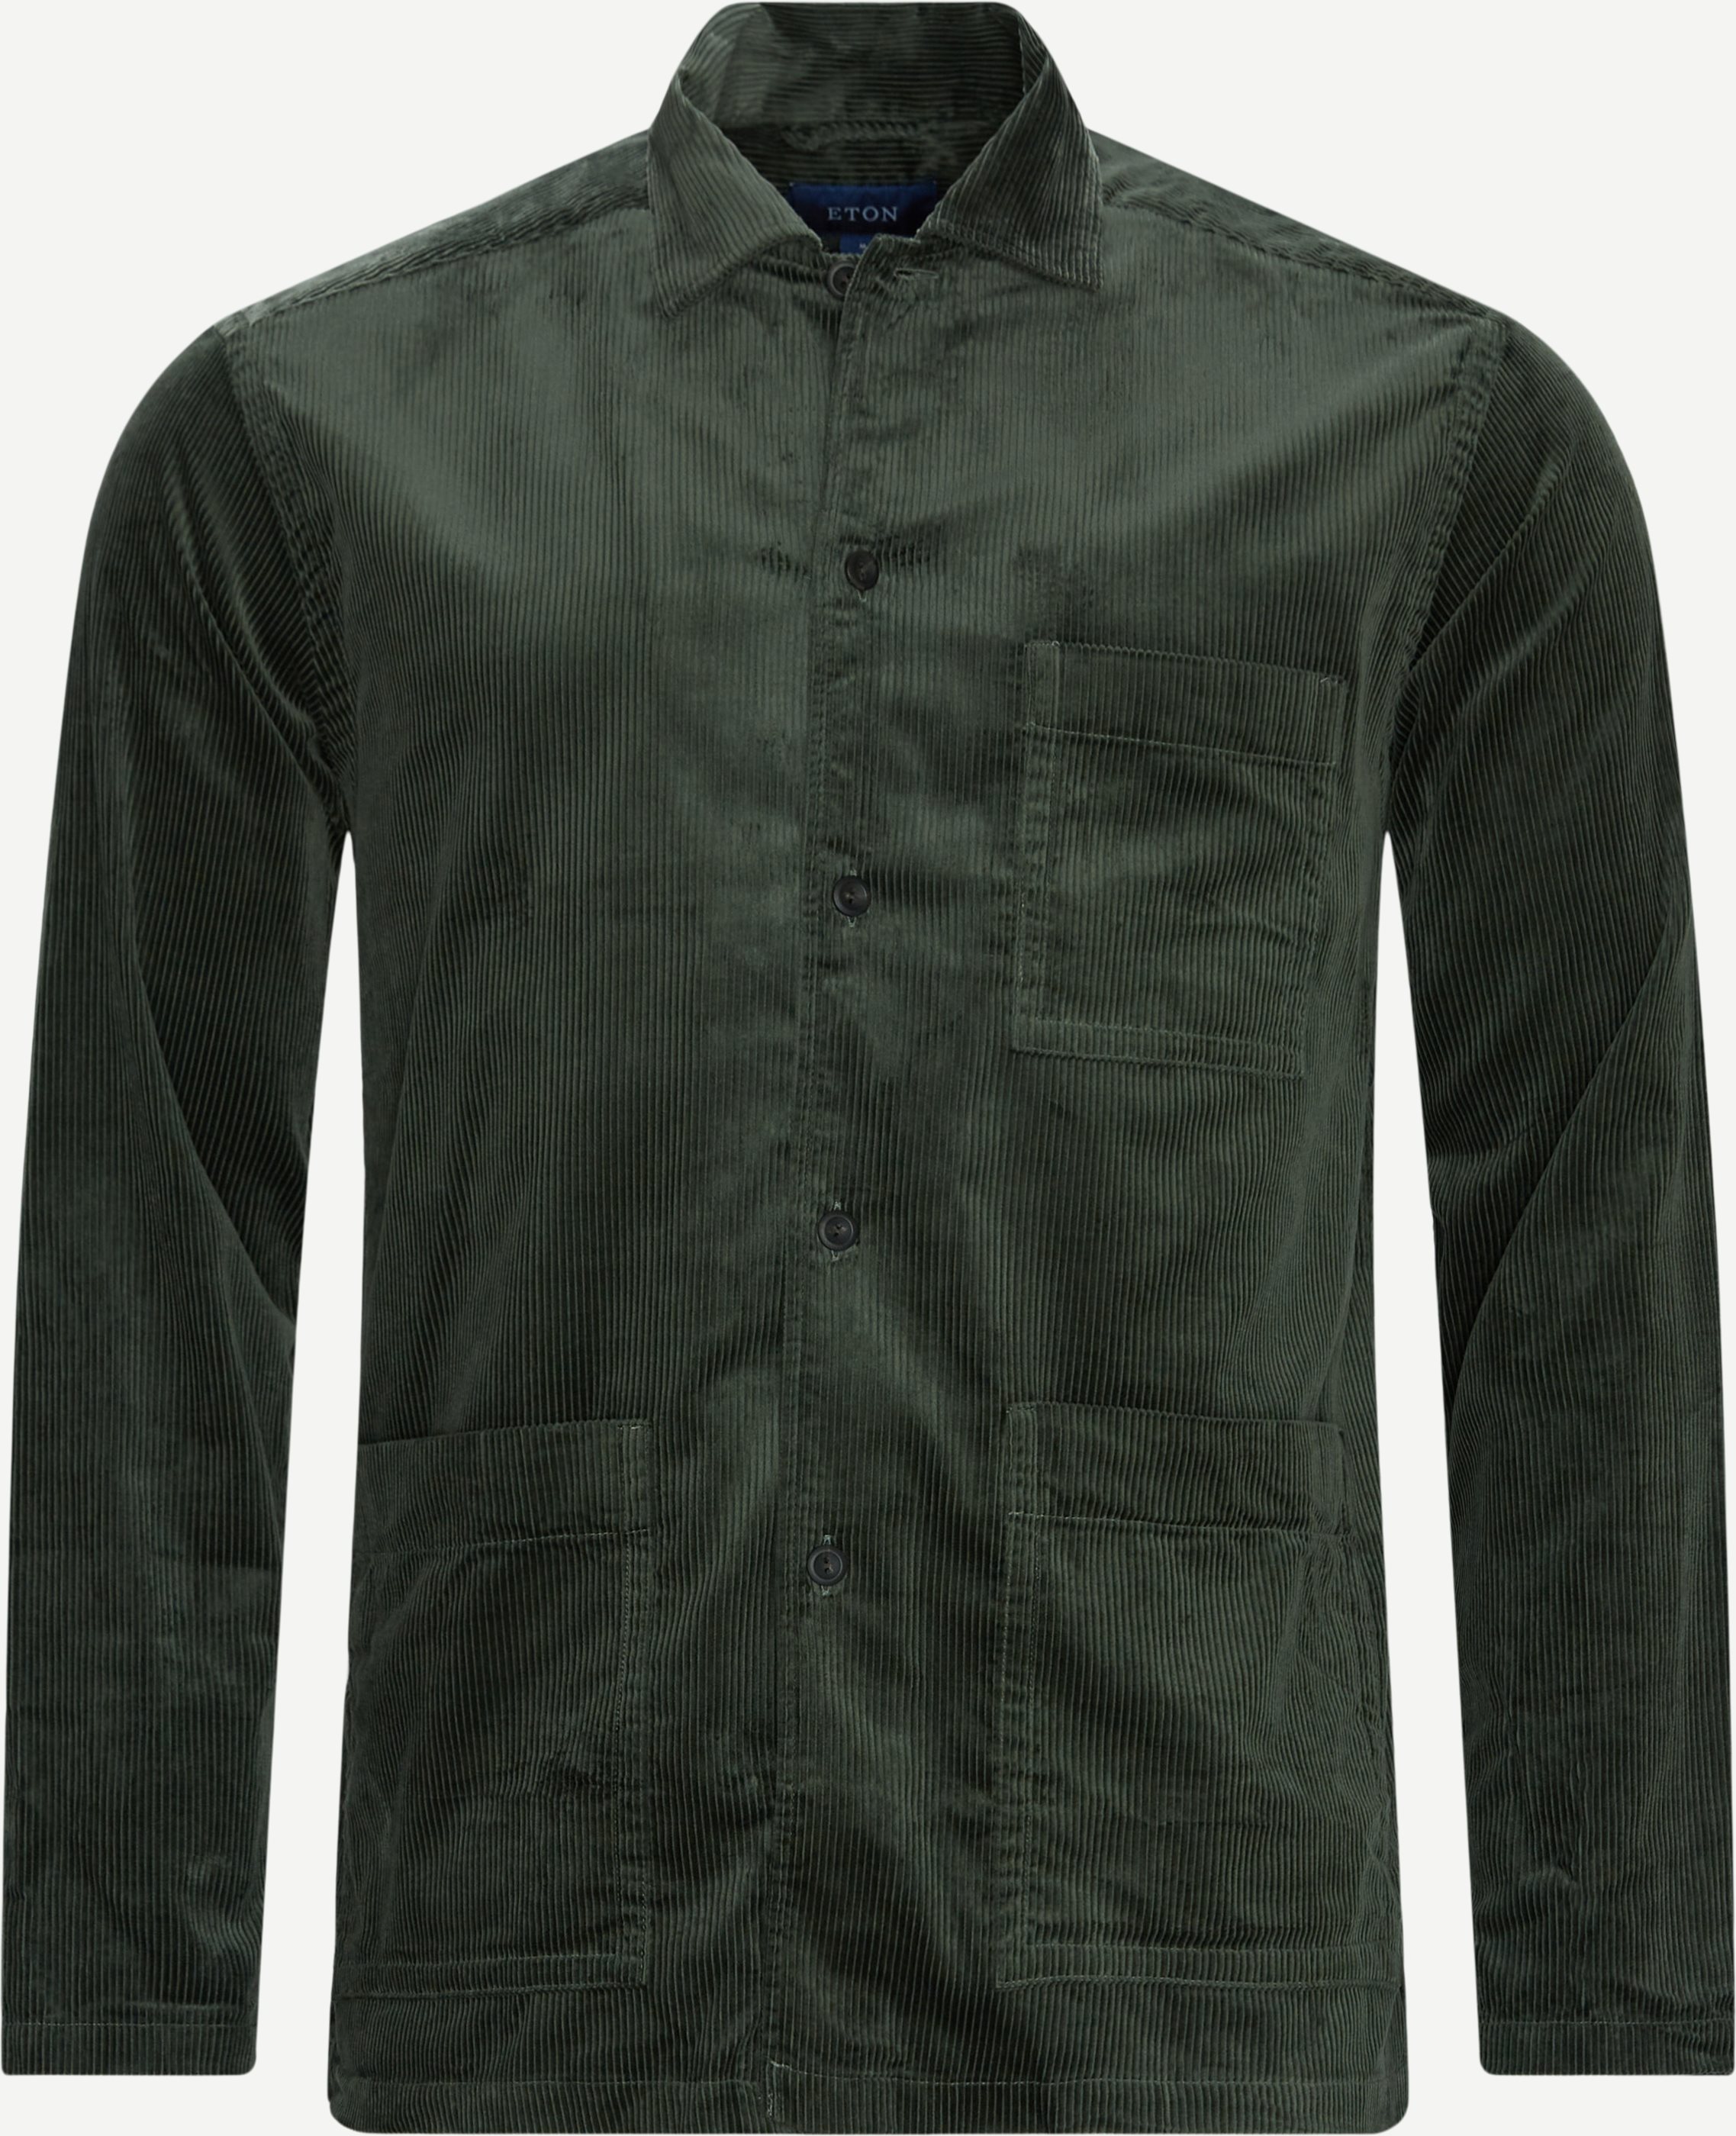 0772 Corduroy Overshirt - Blazer - Regular fit - Army